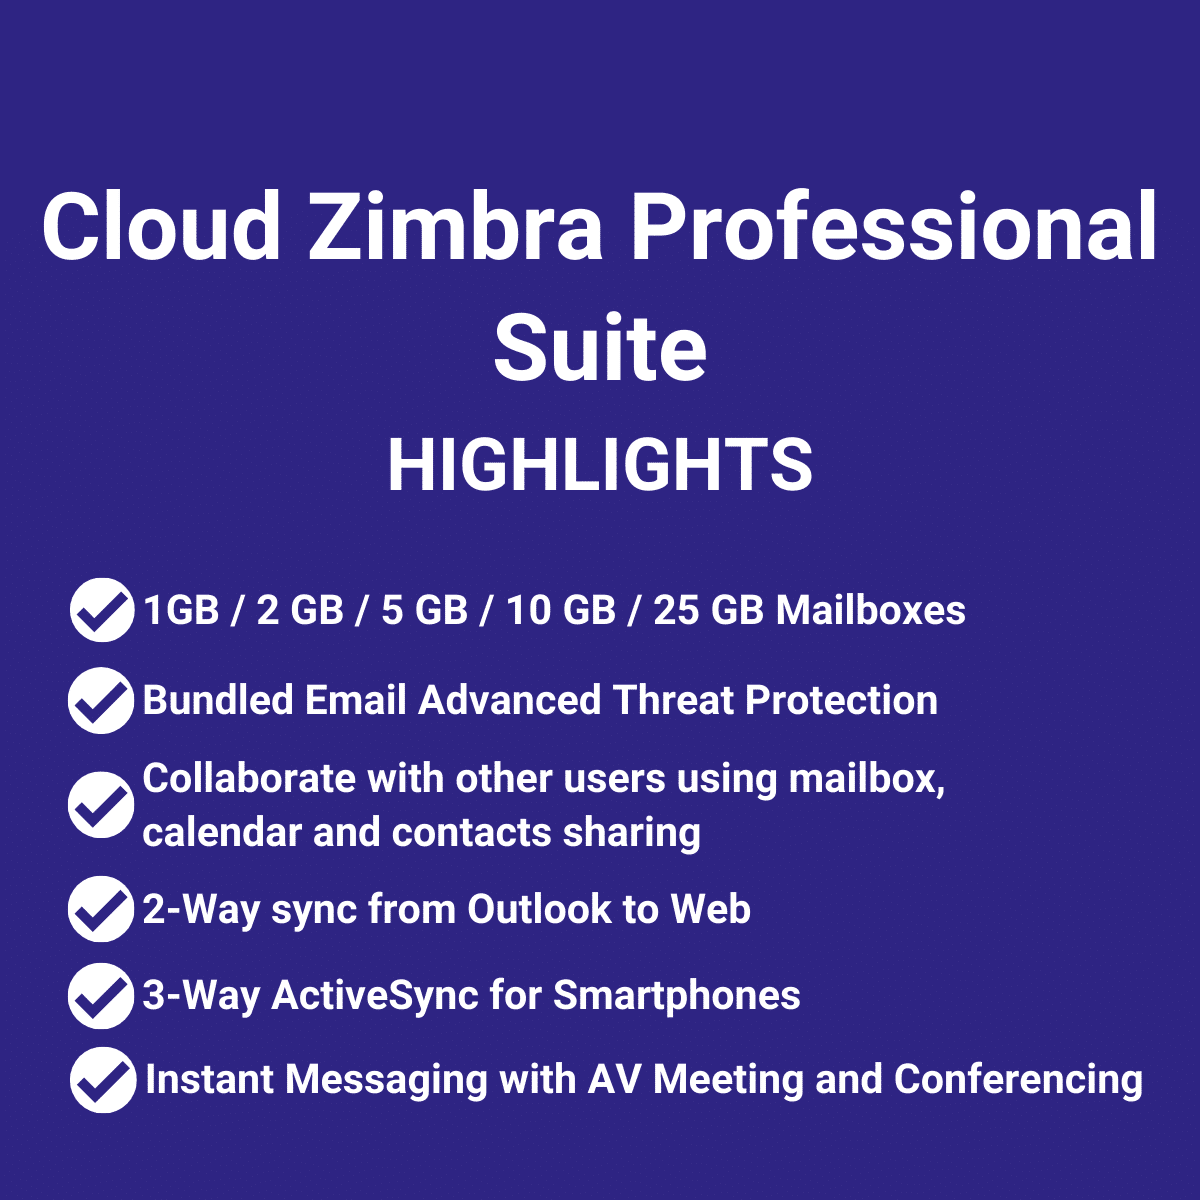 Benefits of Cloud Zimbra Professional Suite